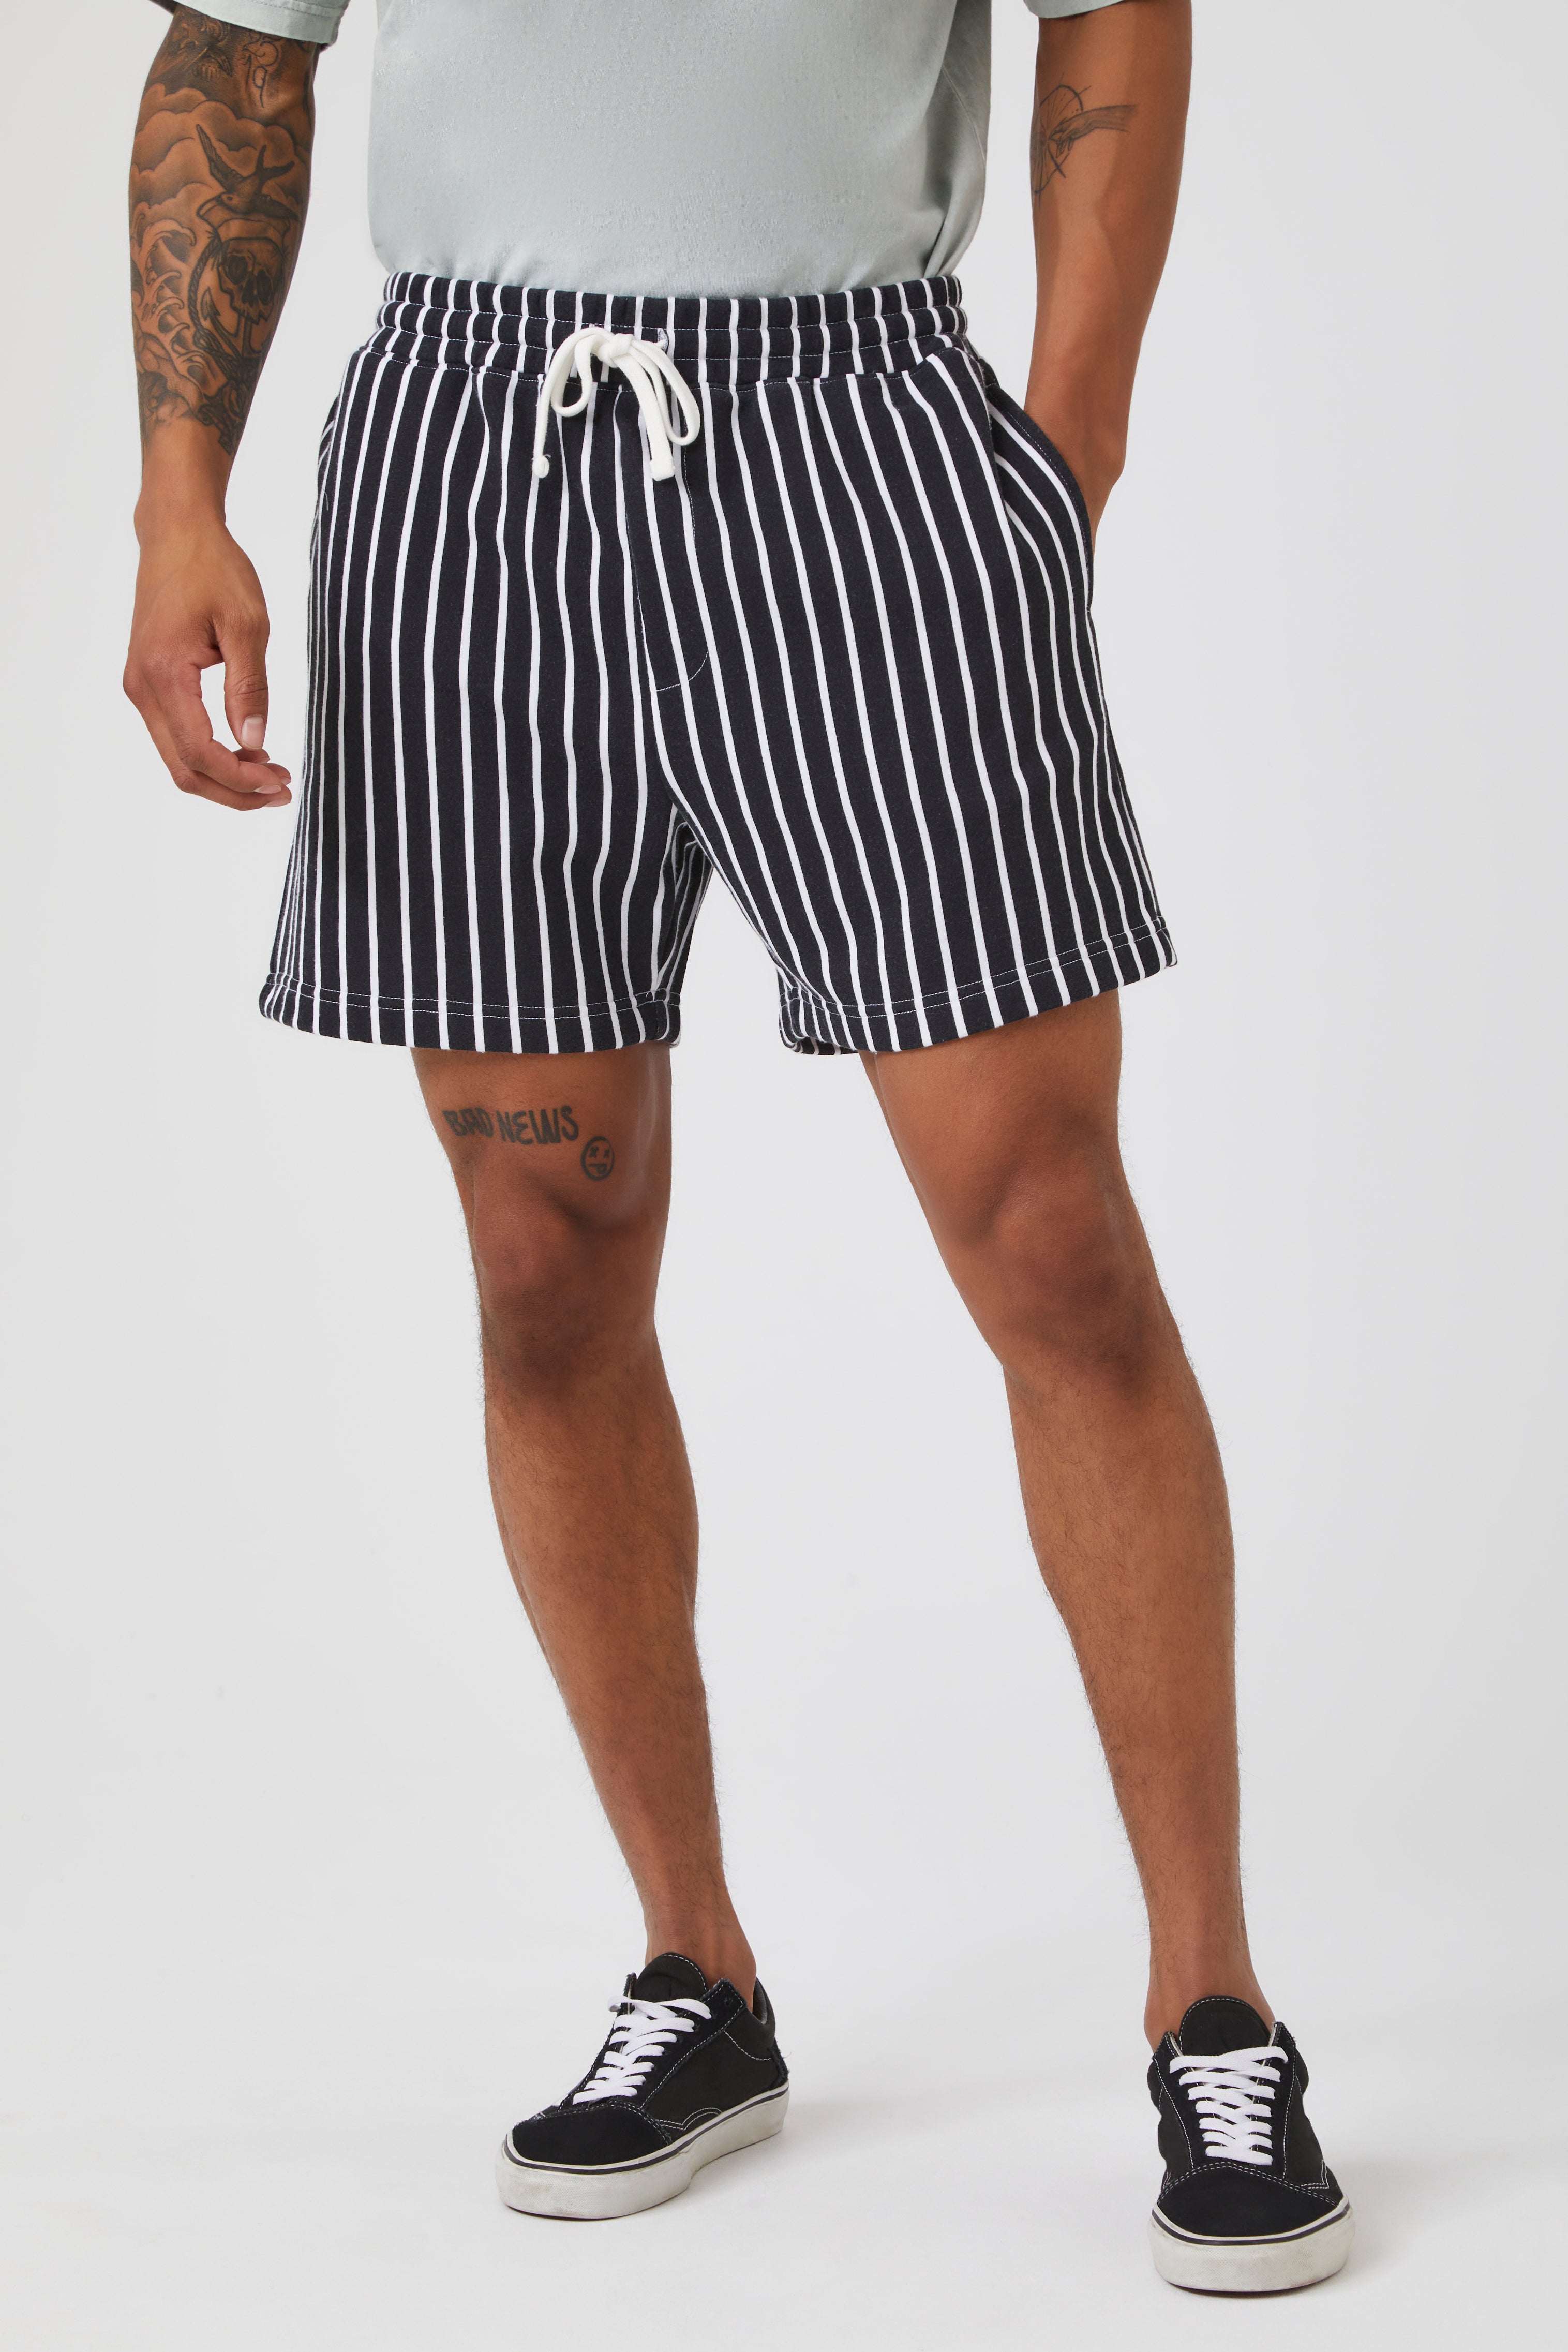 Blackwhite French Terry Striped Shorts 1